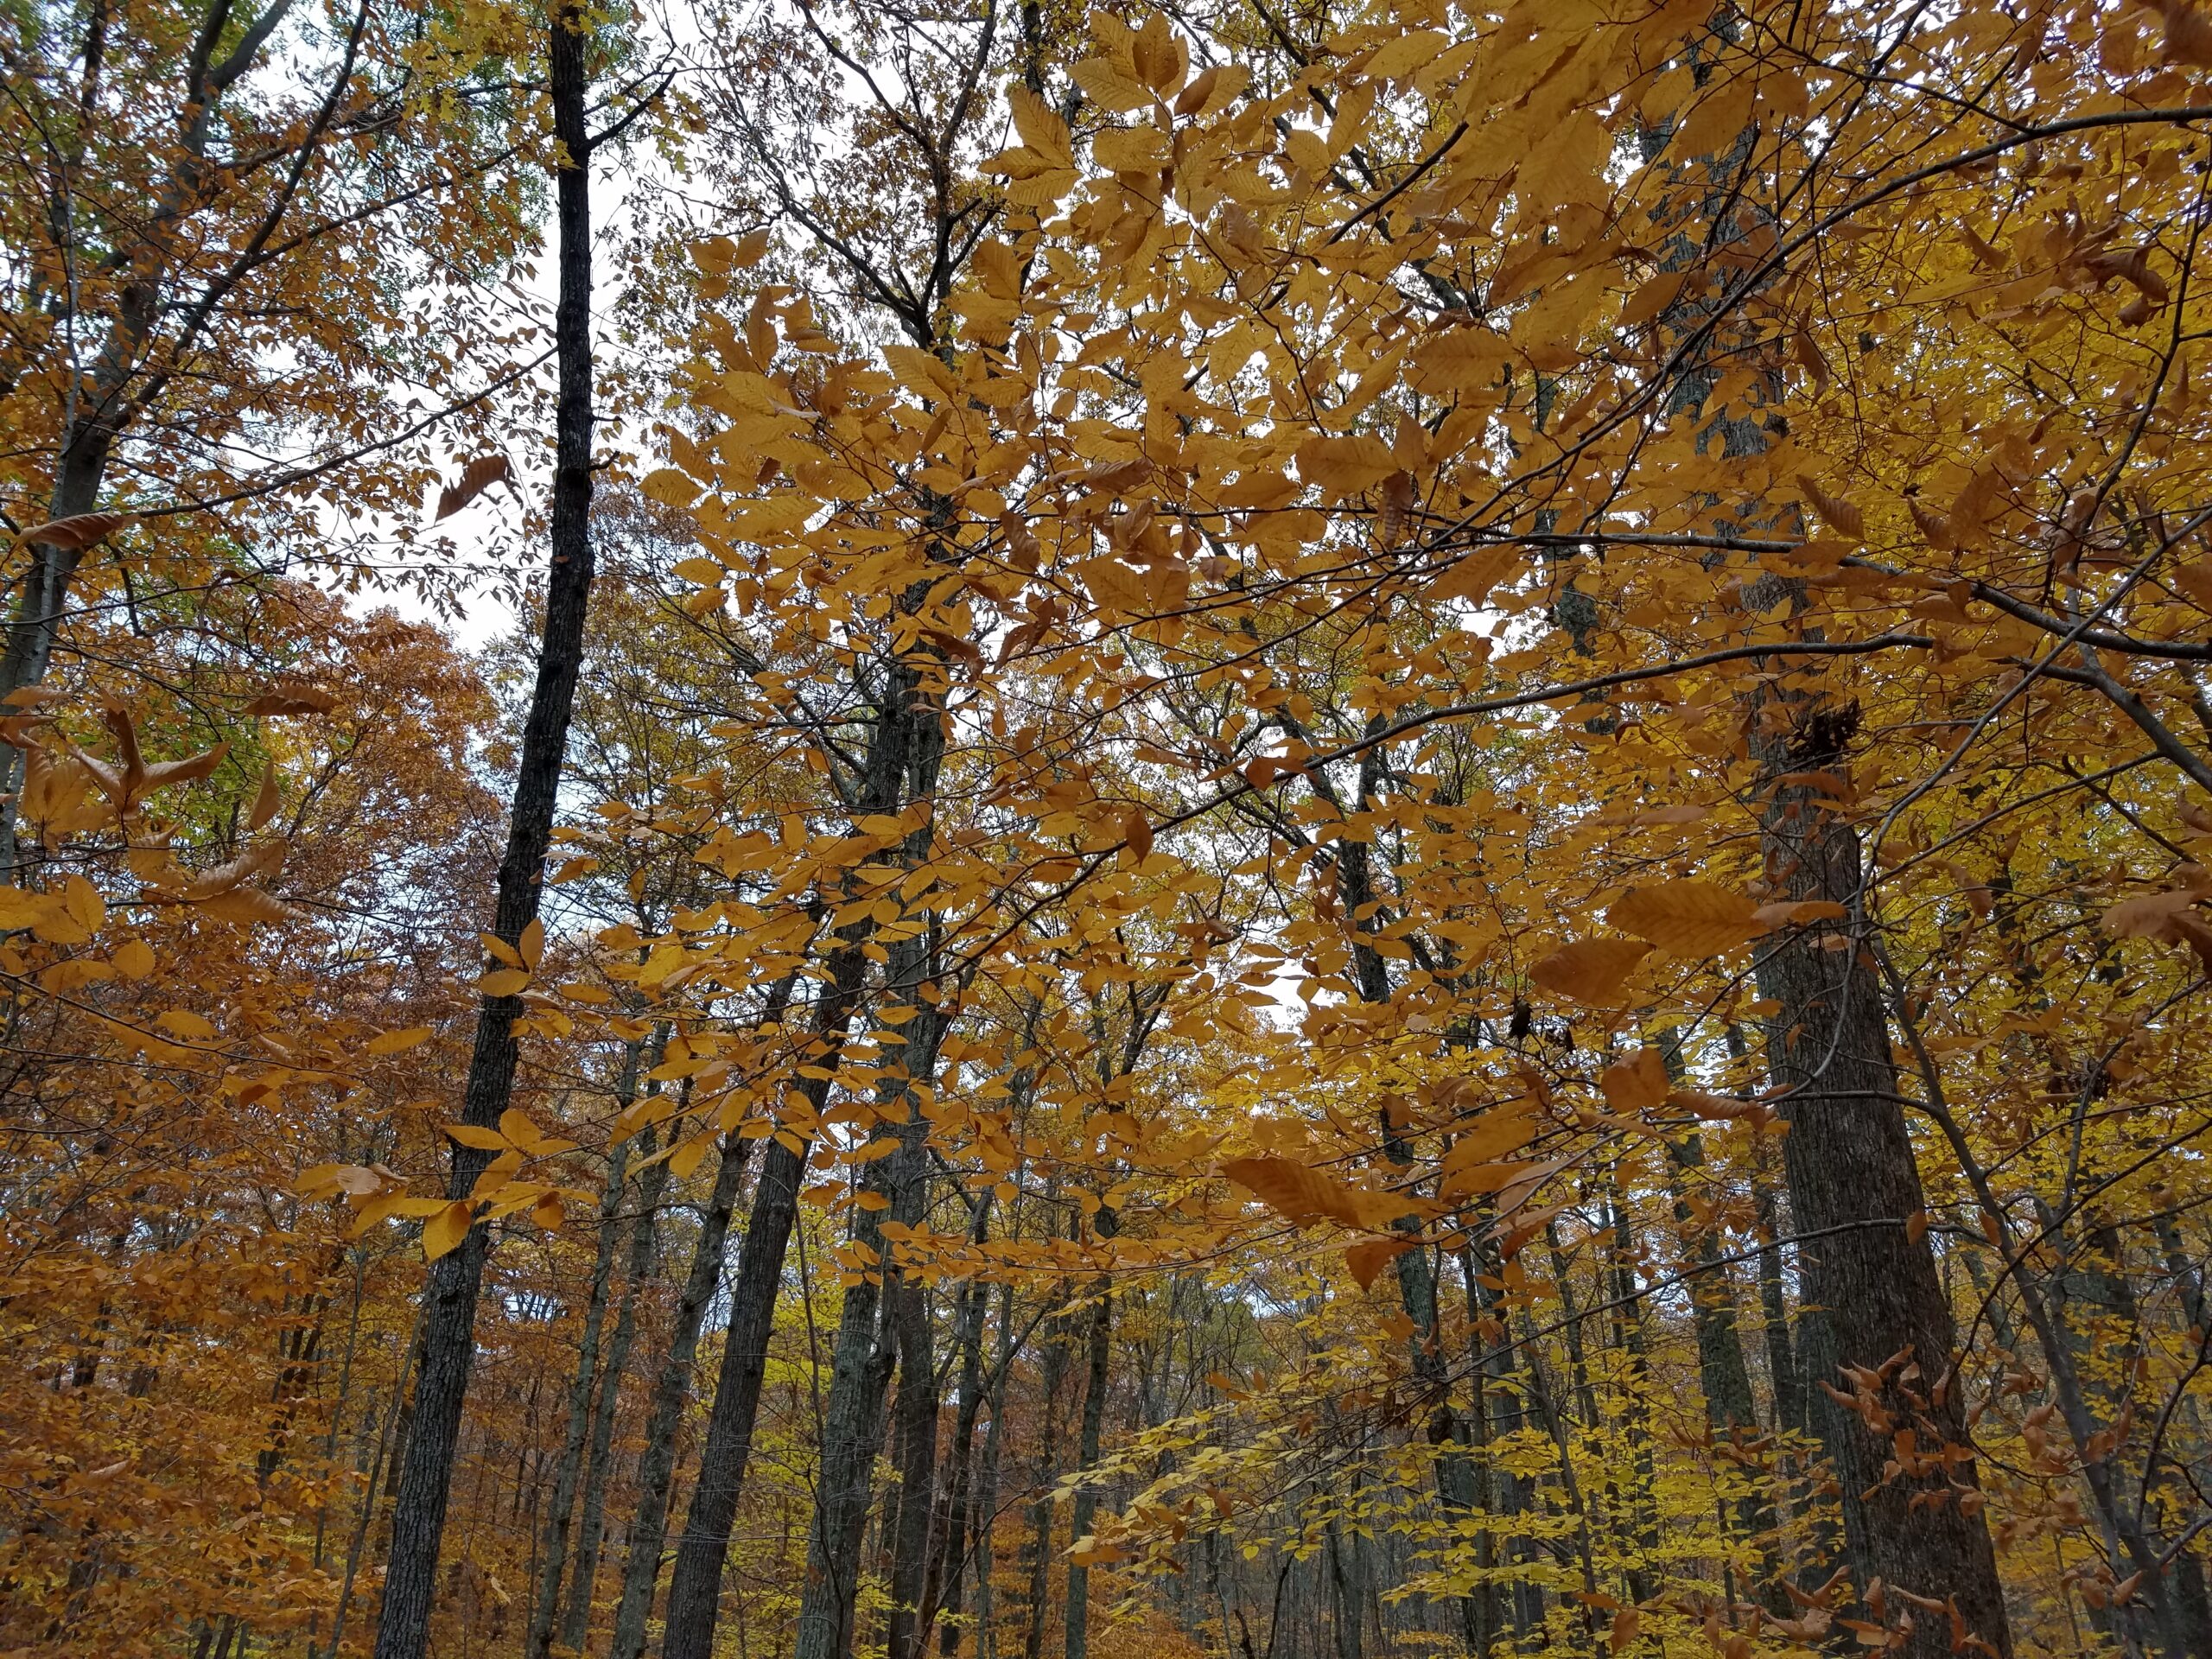 Trees in fall